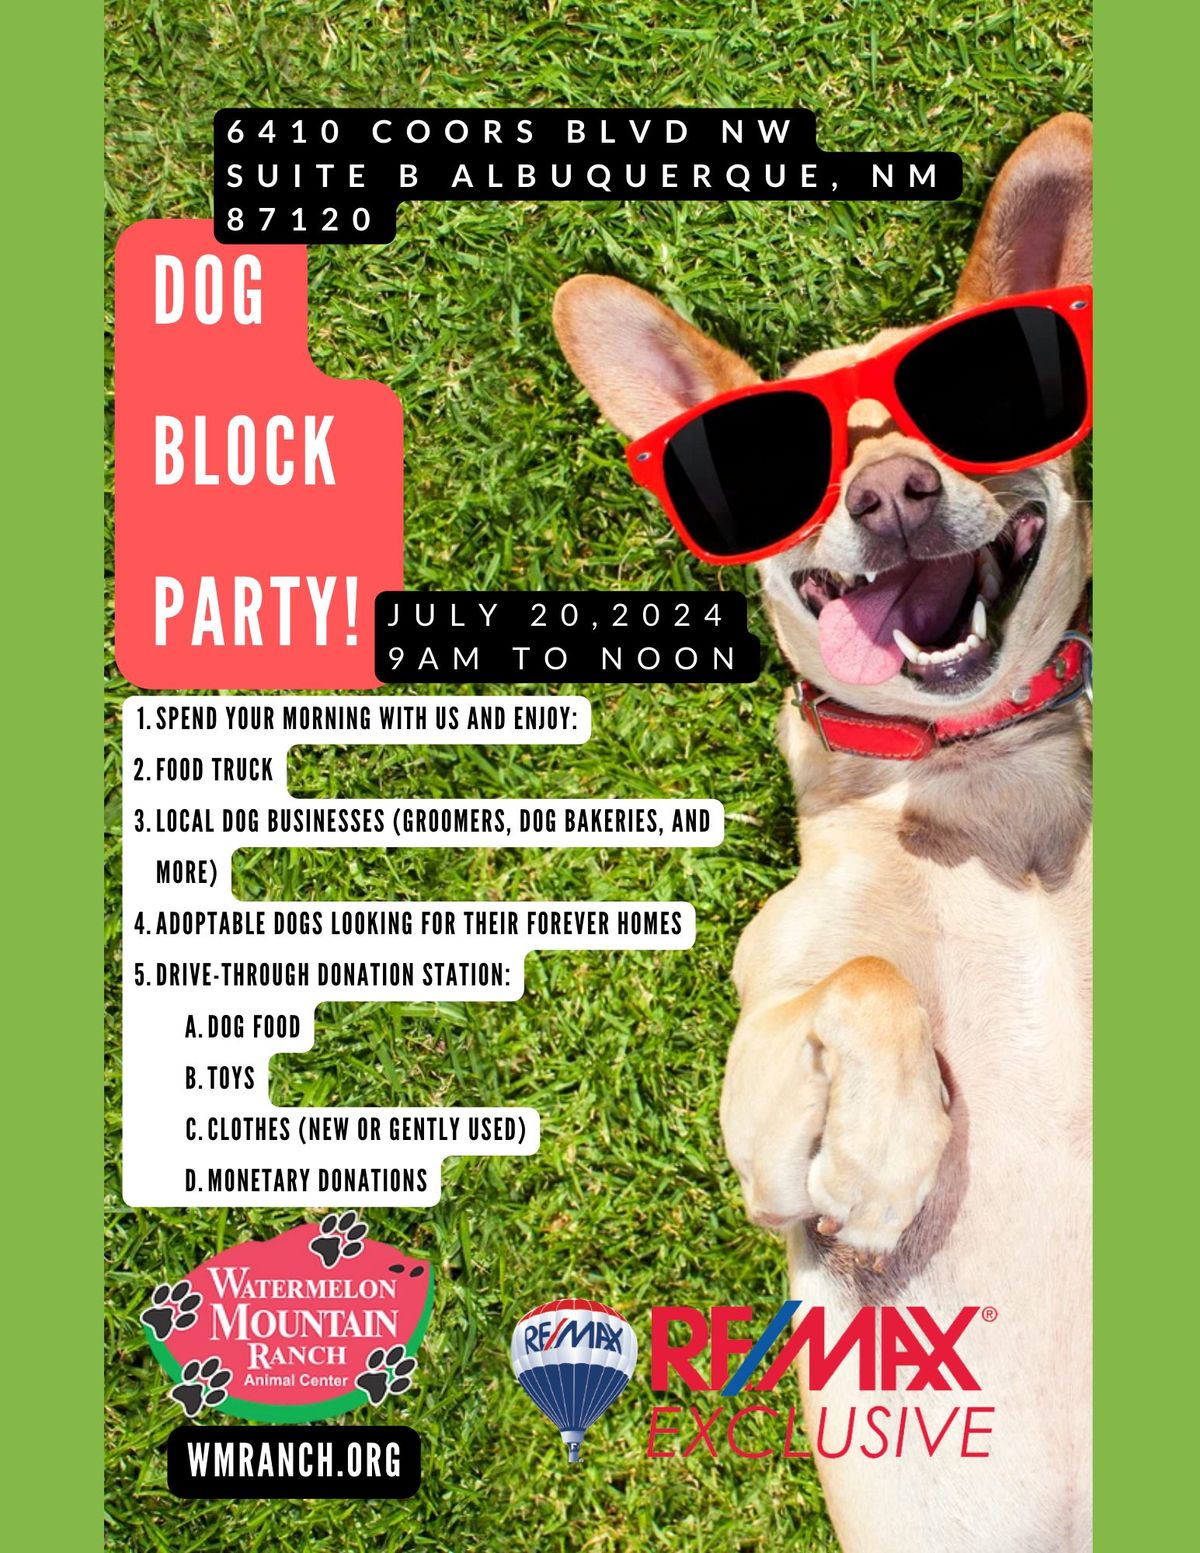 DOG BLOCK PARTY!